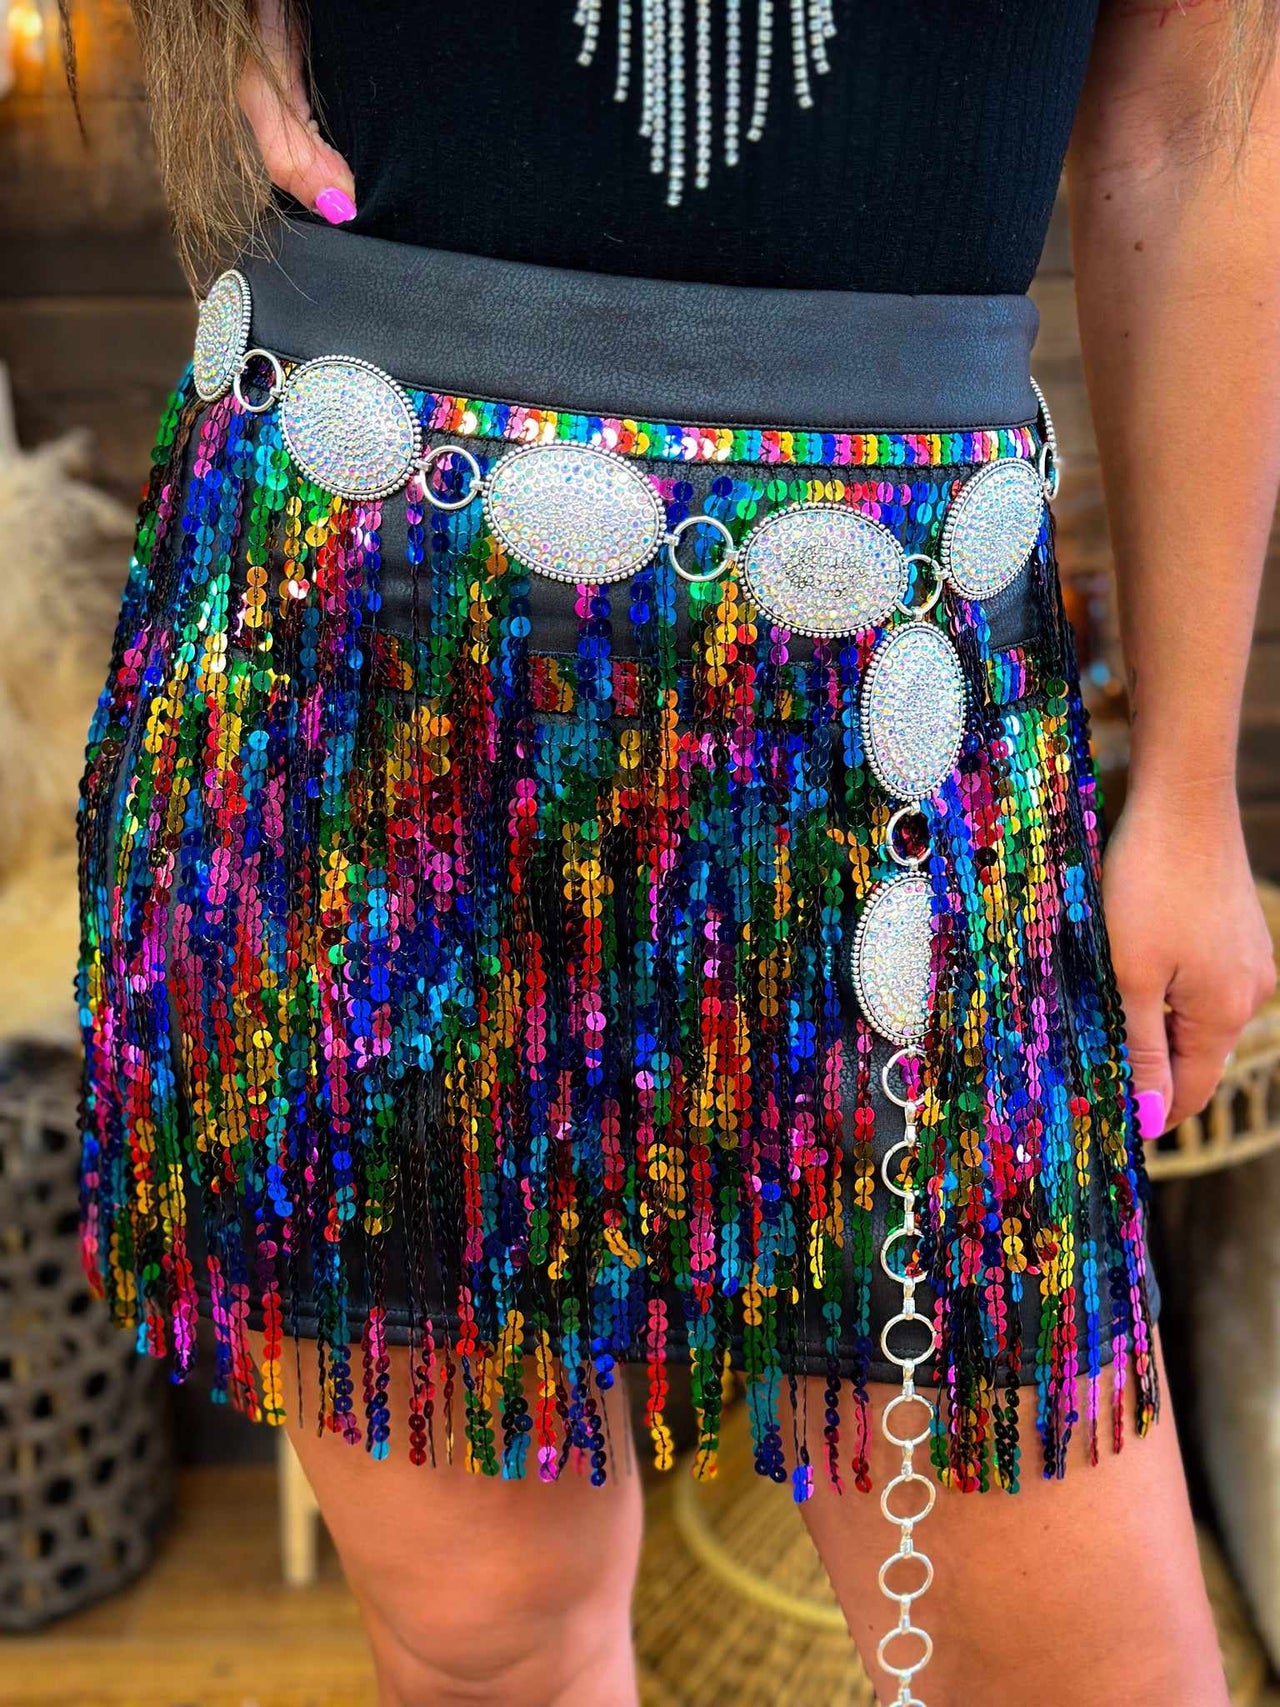 Mini skirt with tiered rainbow sequin overlay.